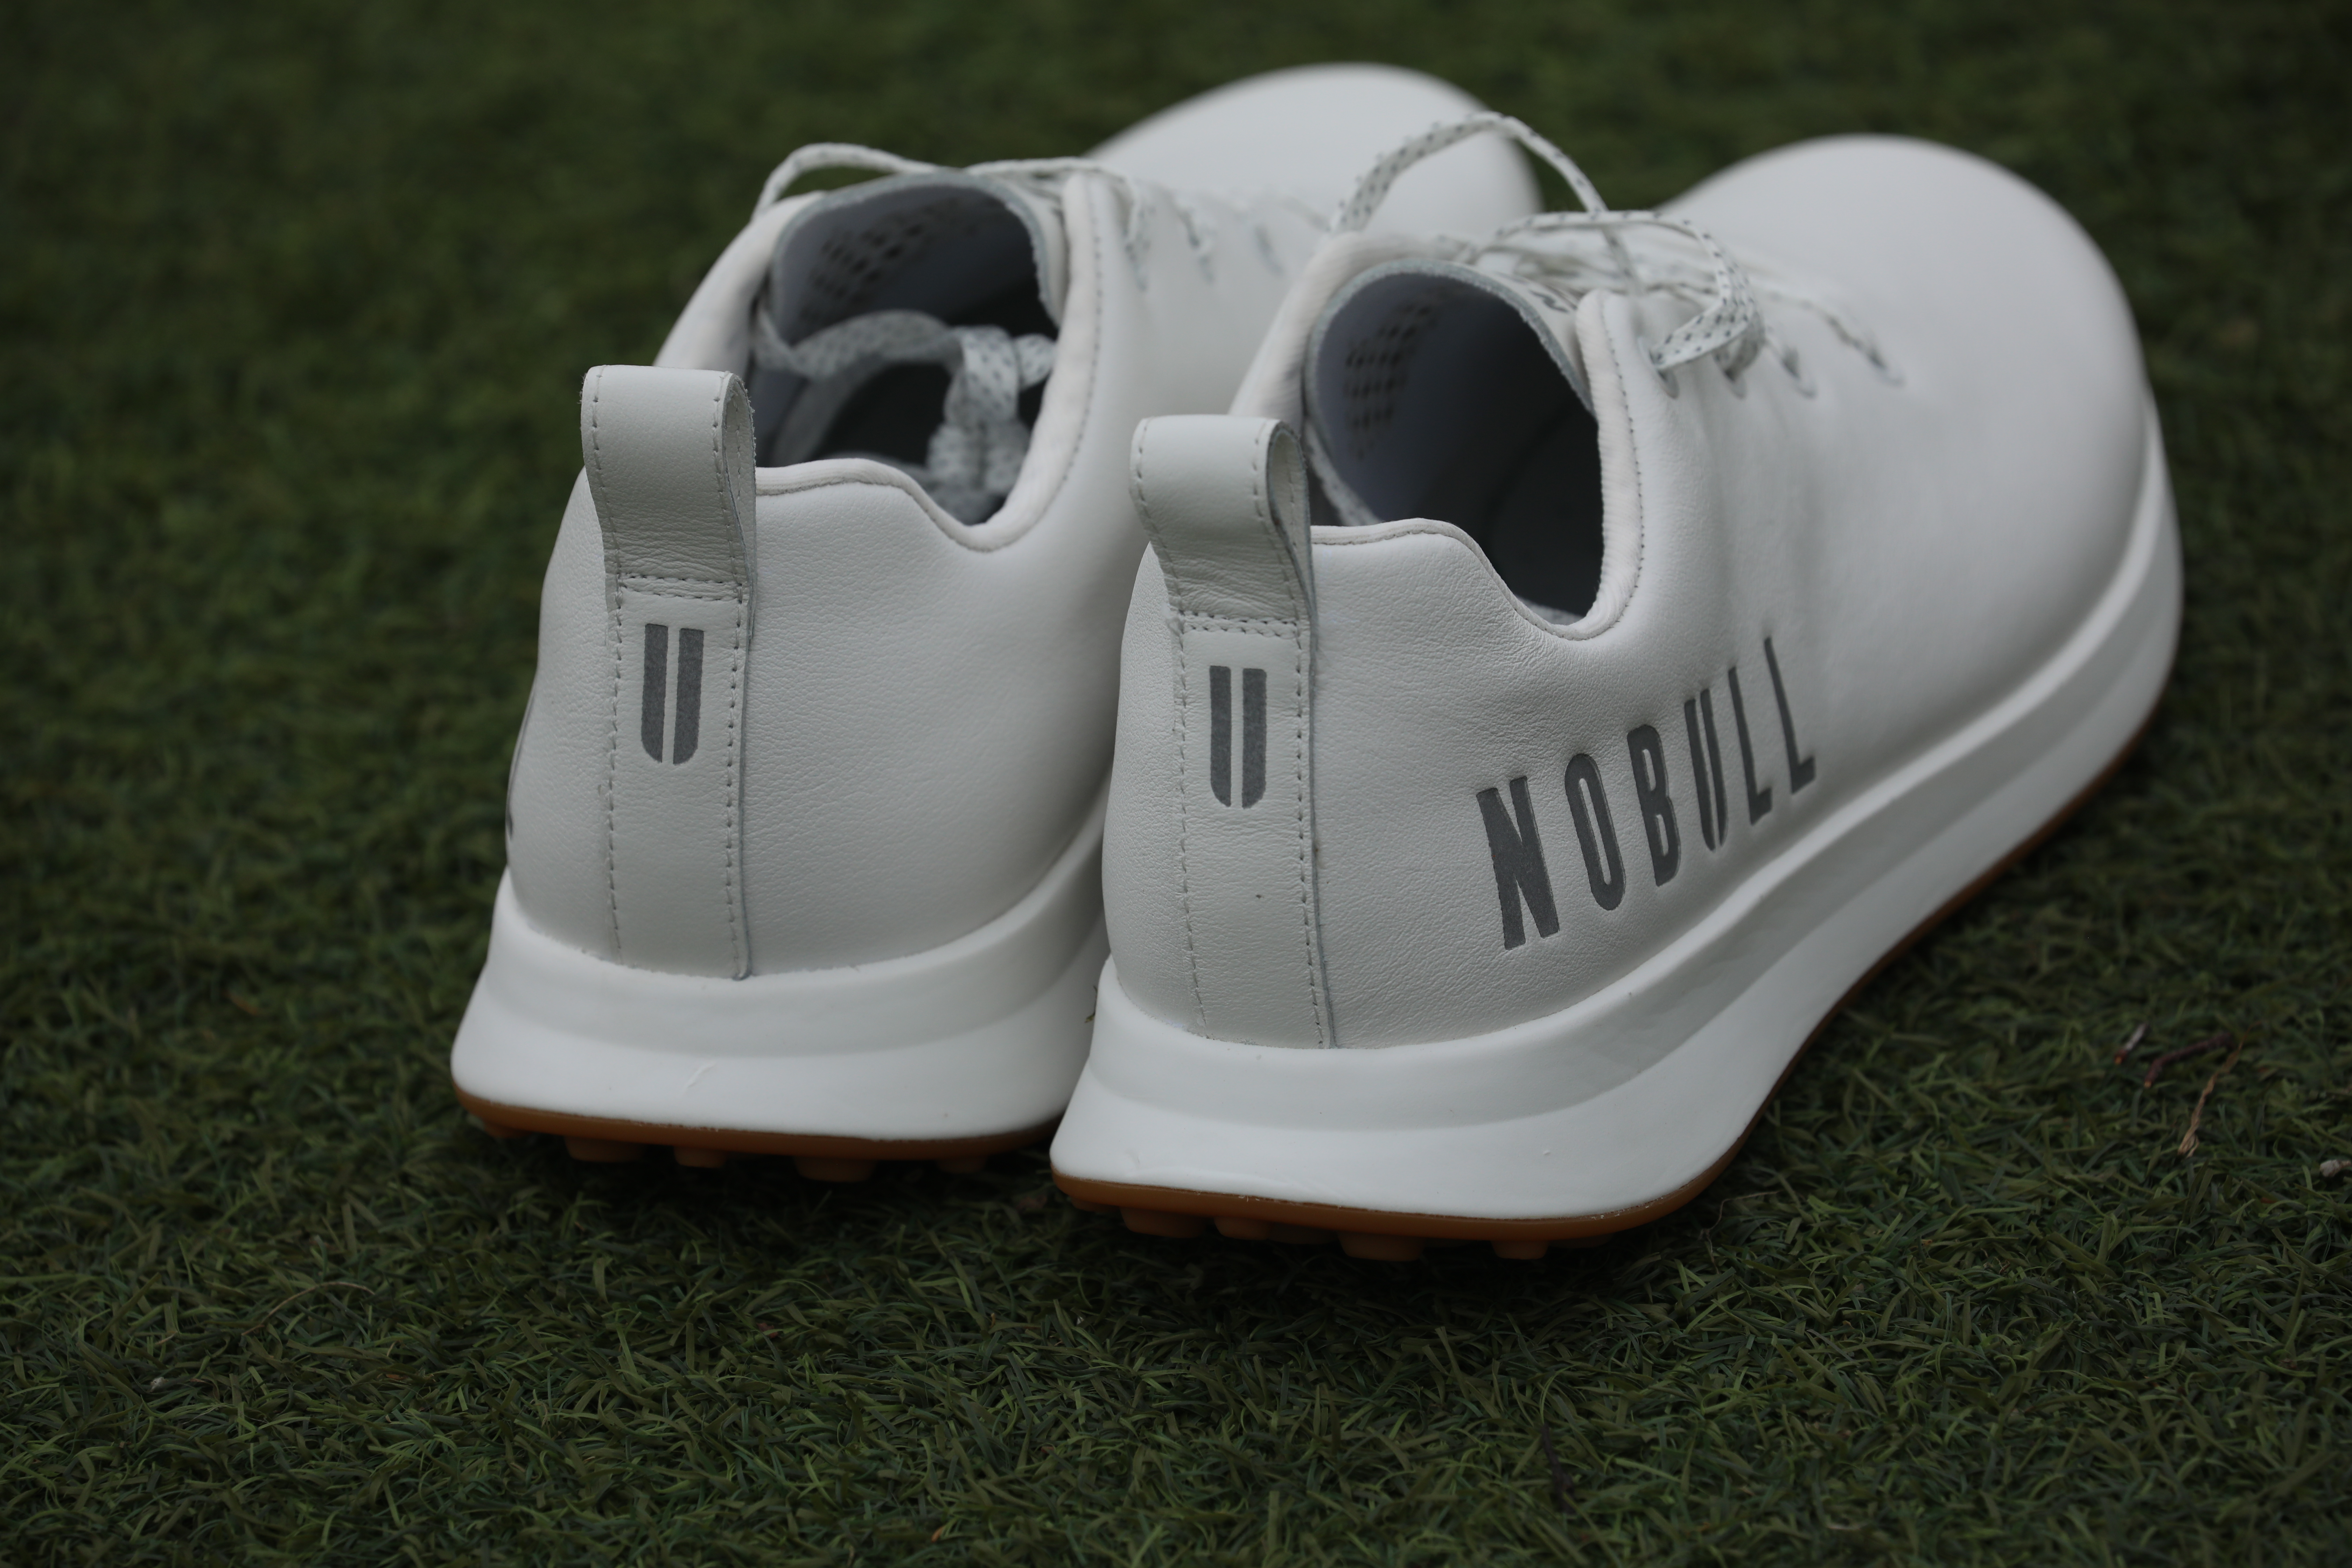 NOBULL Matryx Golf Shoe Review